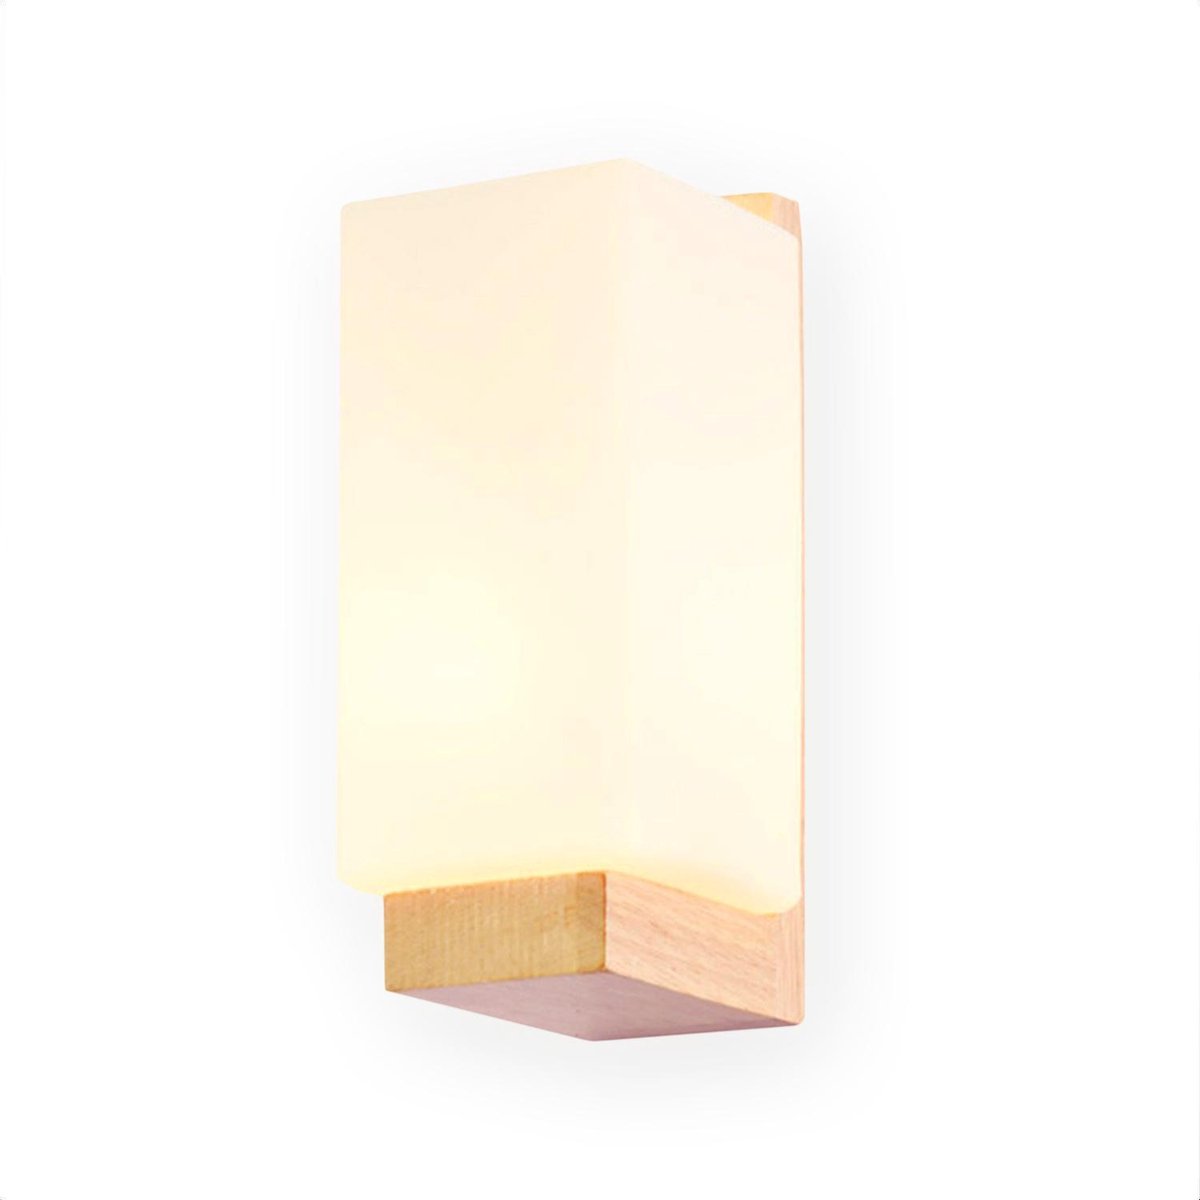 SensaHome Led Binnen Wandlamp - Stijlvolle Houten Wandlamp - Landelijk Design - (E27 Lichtbron Inbegrepen) - Woonkamer/Slaapkamer/Gangpad Verlichting - 8x25cm